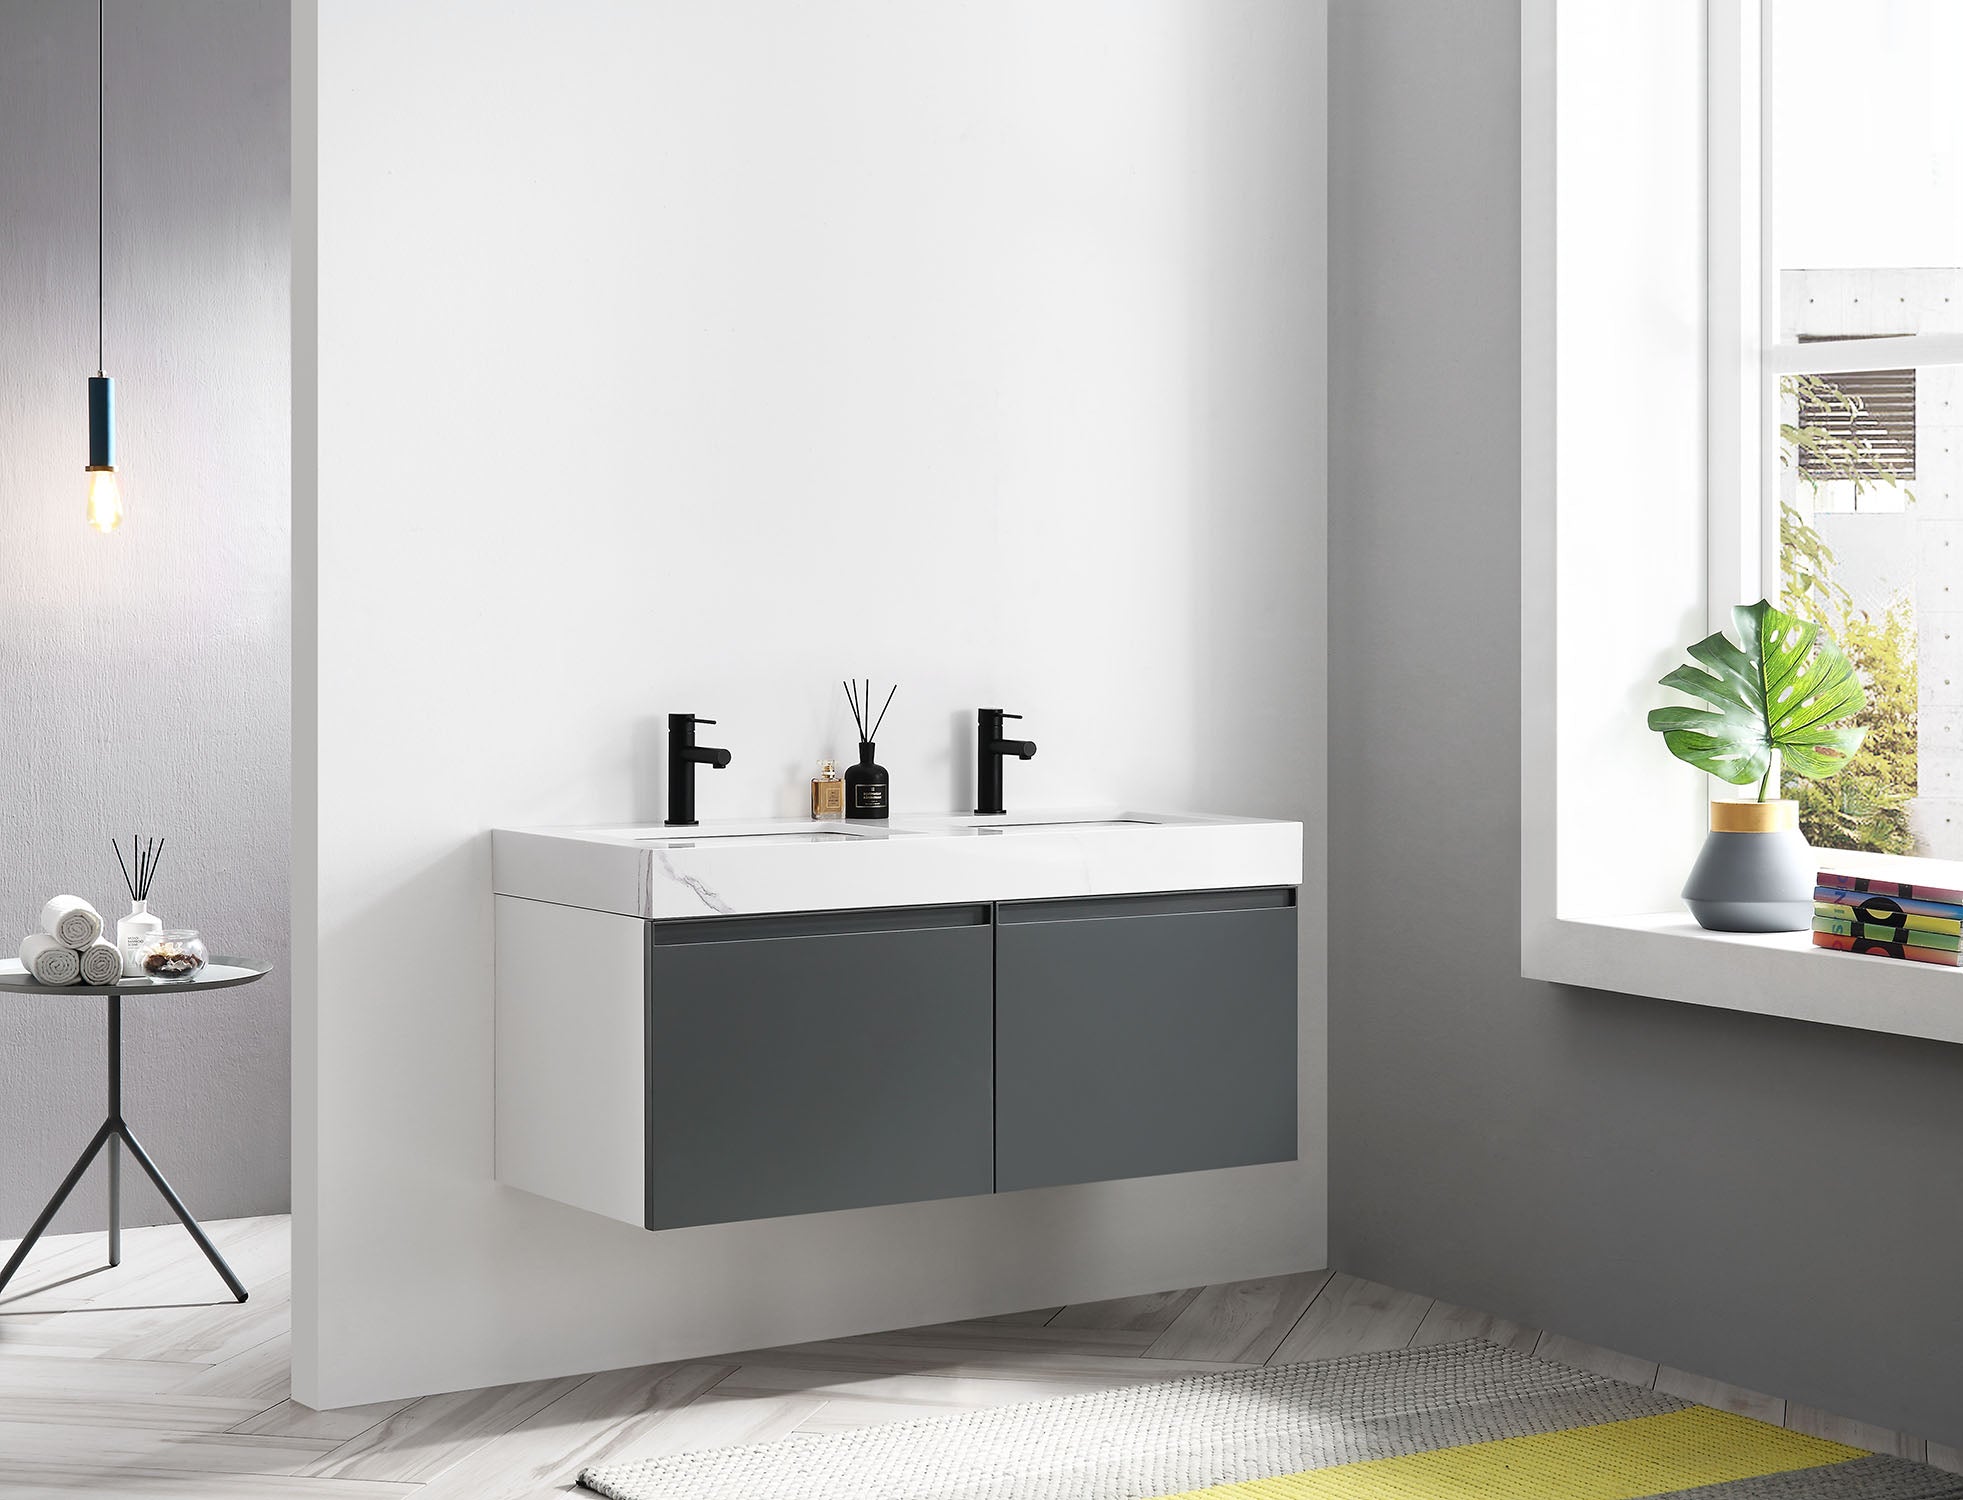 CARTISAN Design Erato 48-in Dark Gray Undermount Double Sink Floating Bathroom Vanity with White Quartz Top | VAMANDG48WMQZ